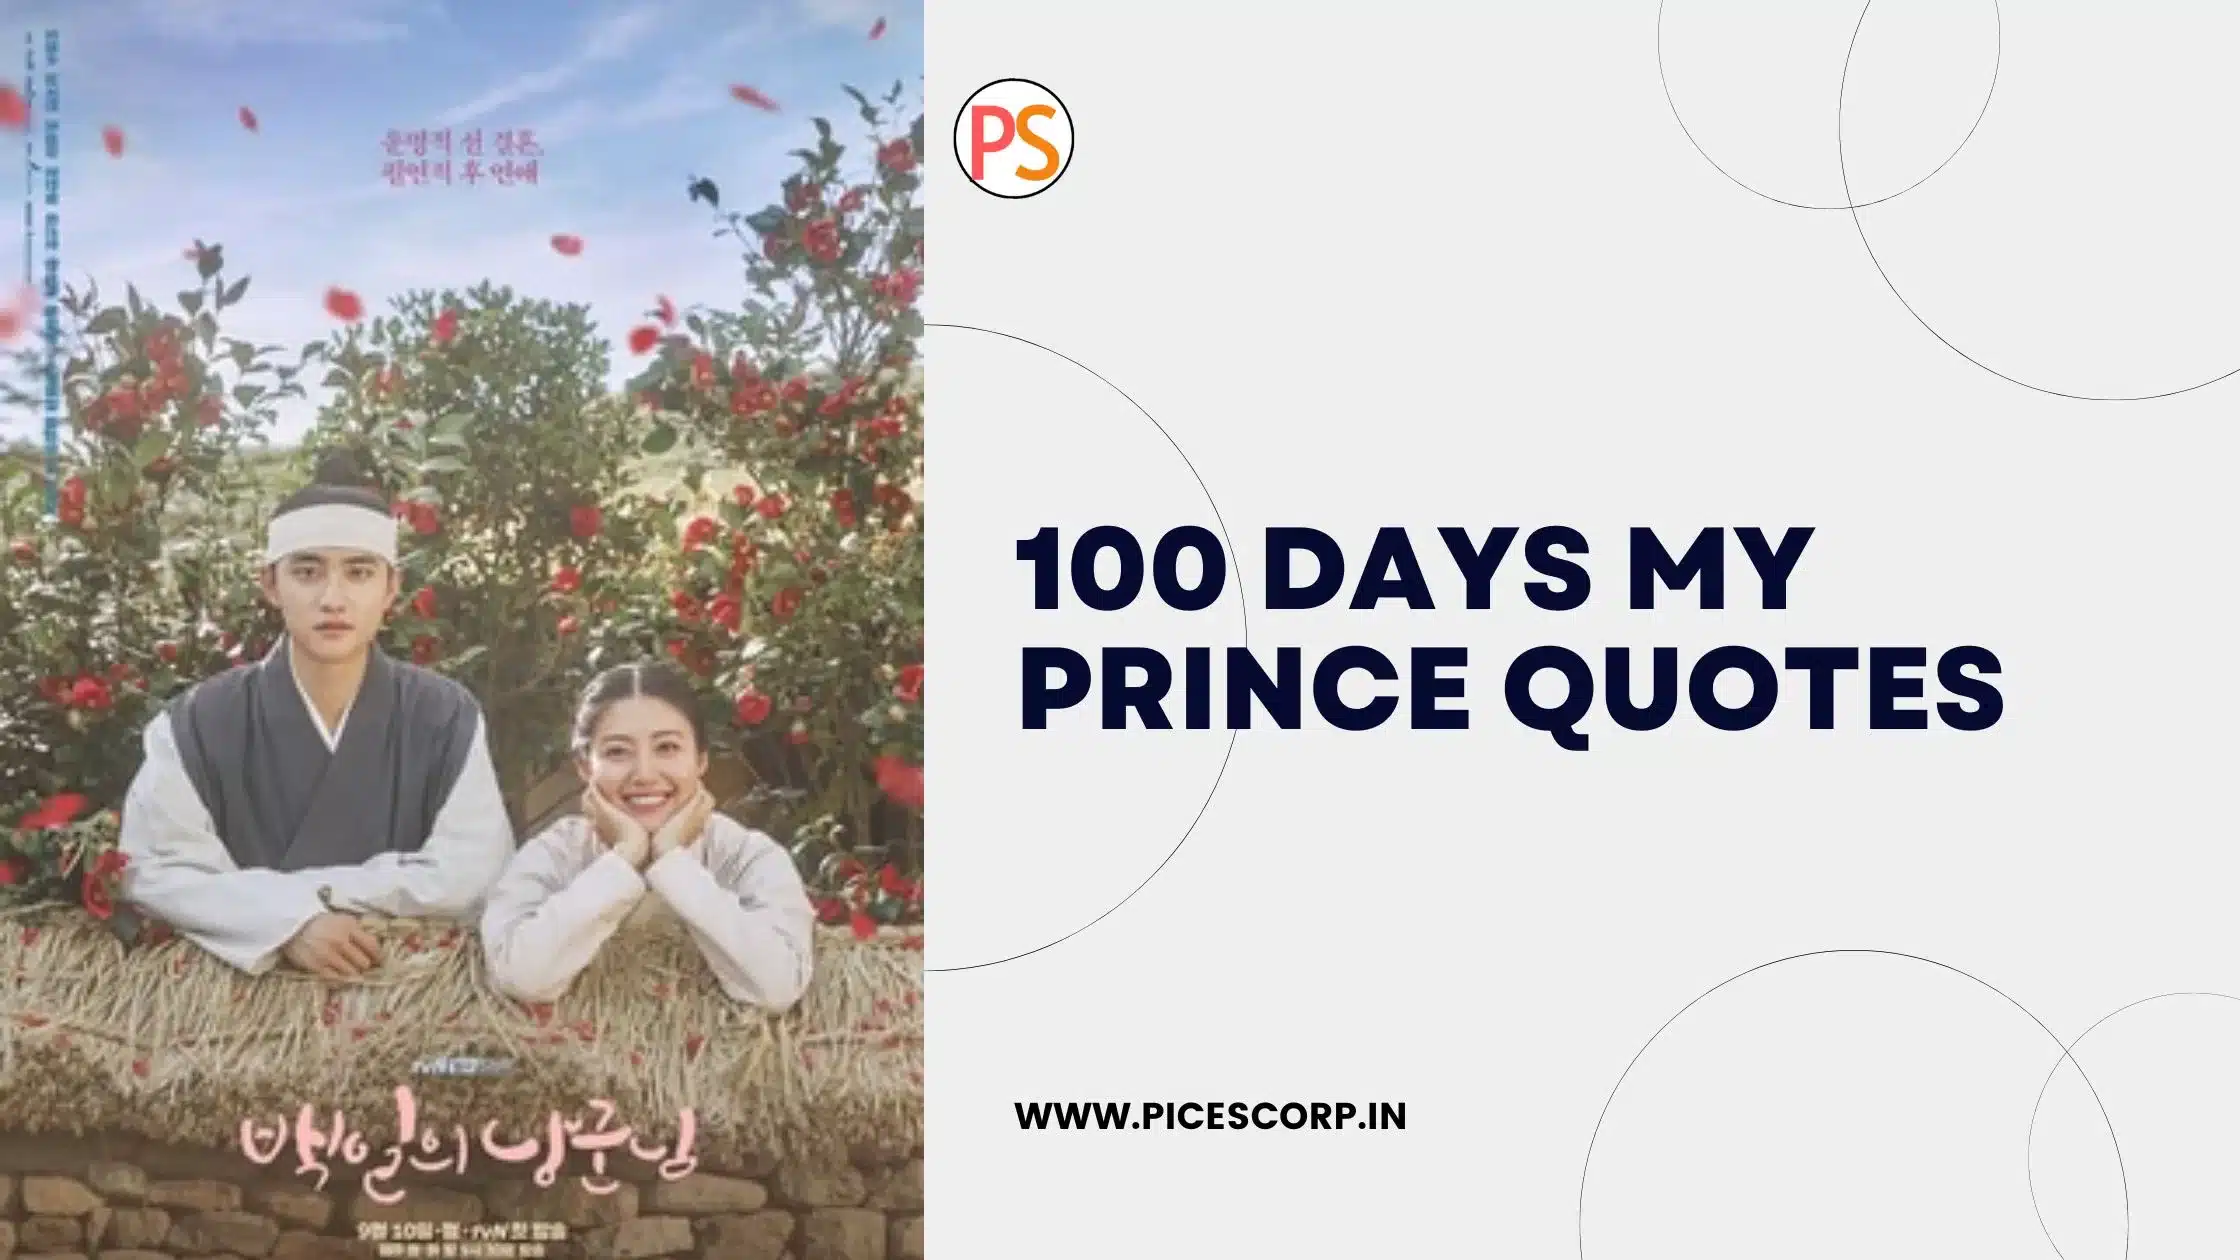 100 days my prince